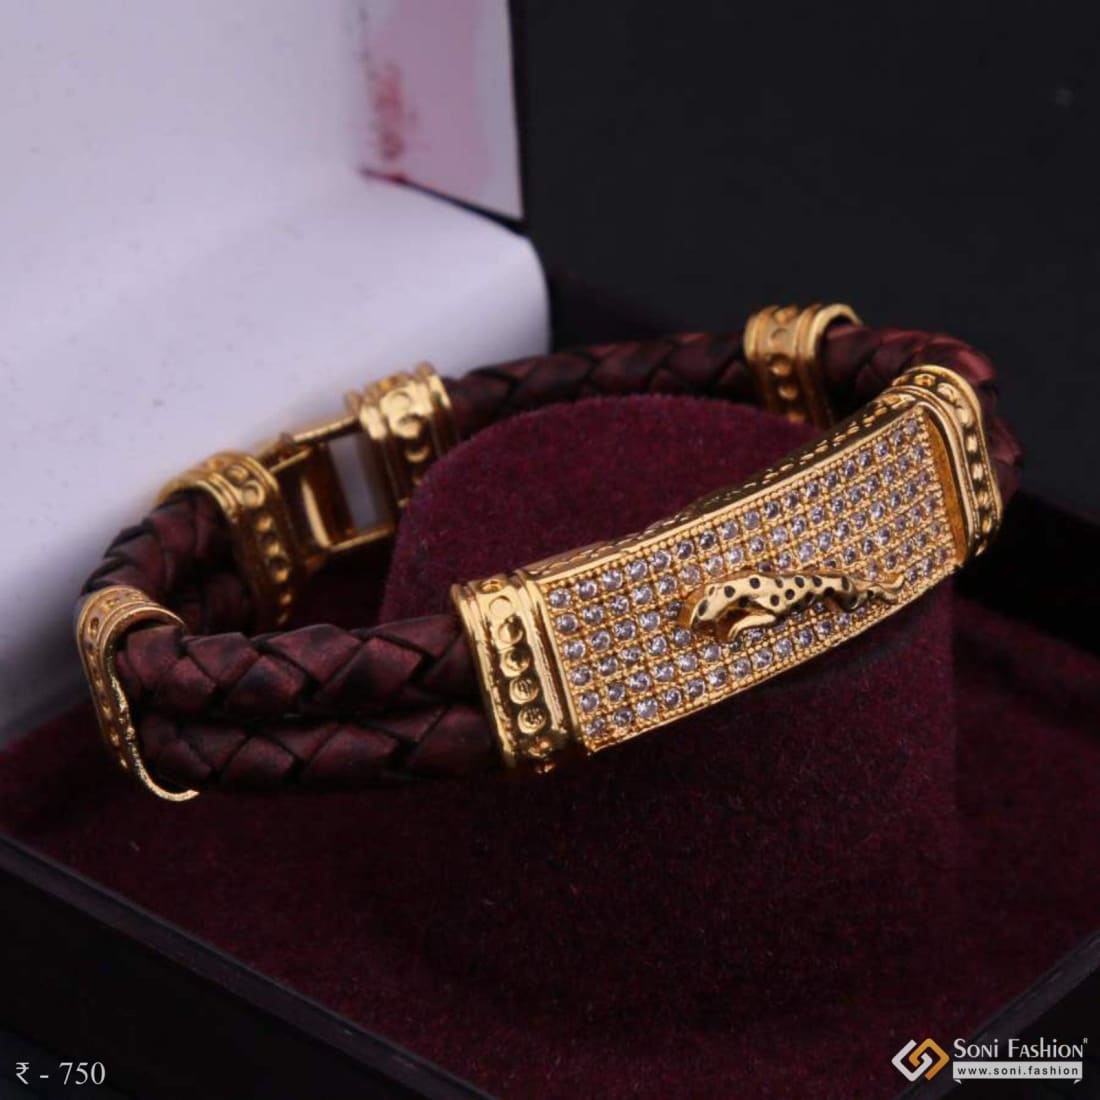 Gold... - Soni Fashion Jewellery & Accessories for Men | Facebook